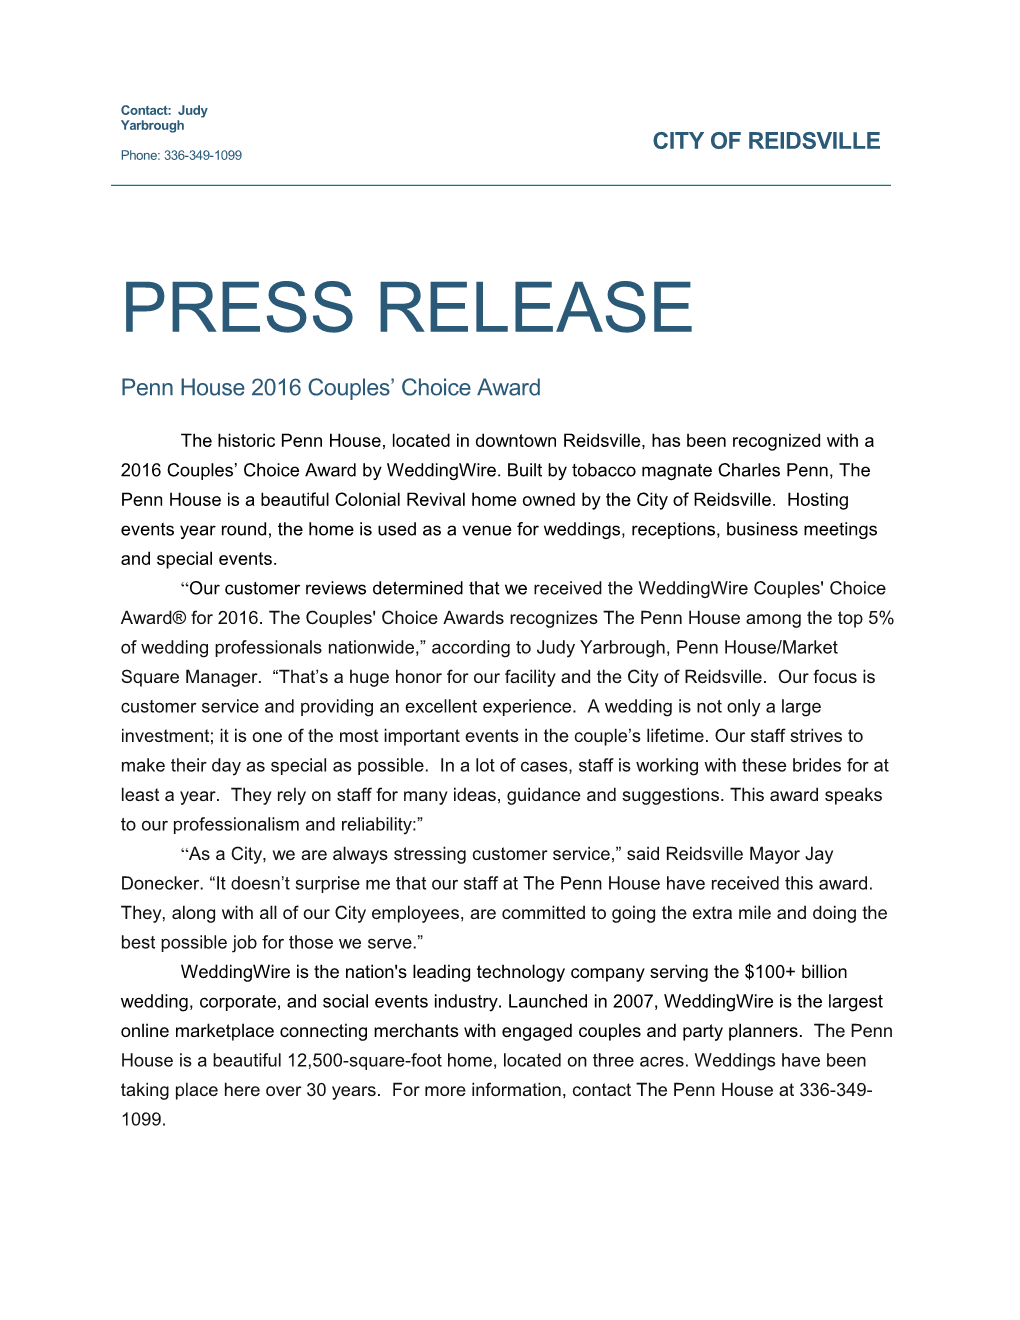 Quarterly Earnings Press Release